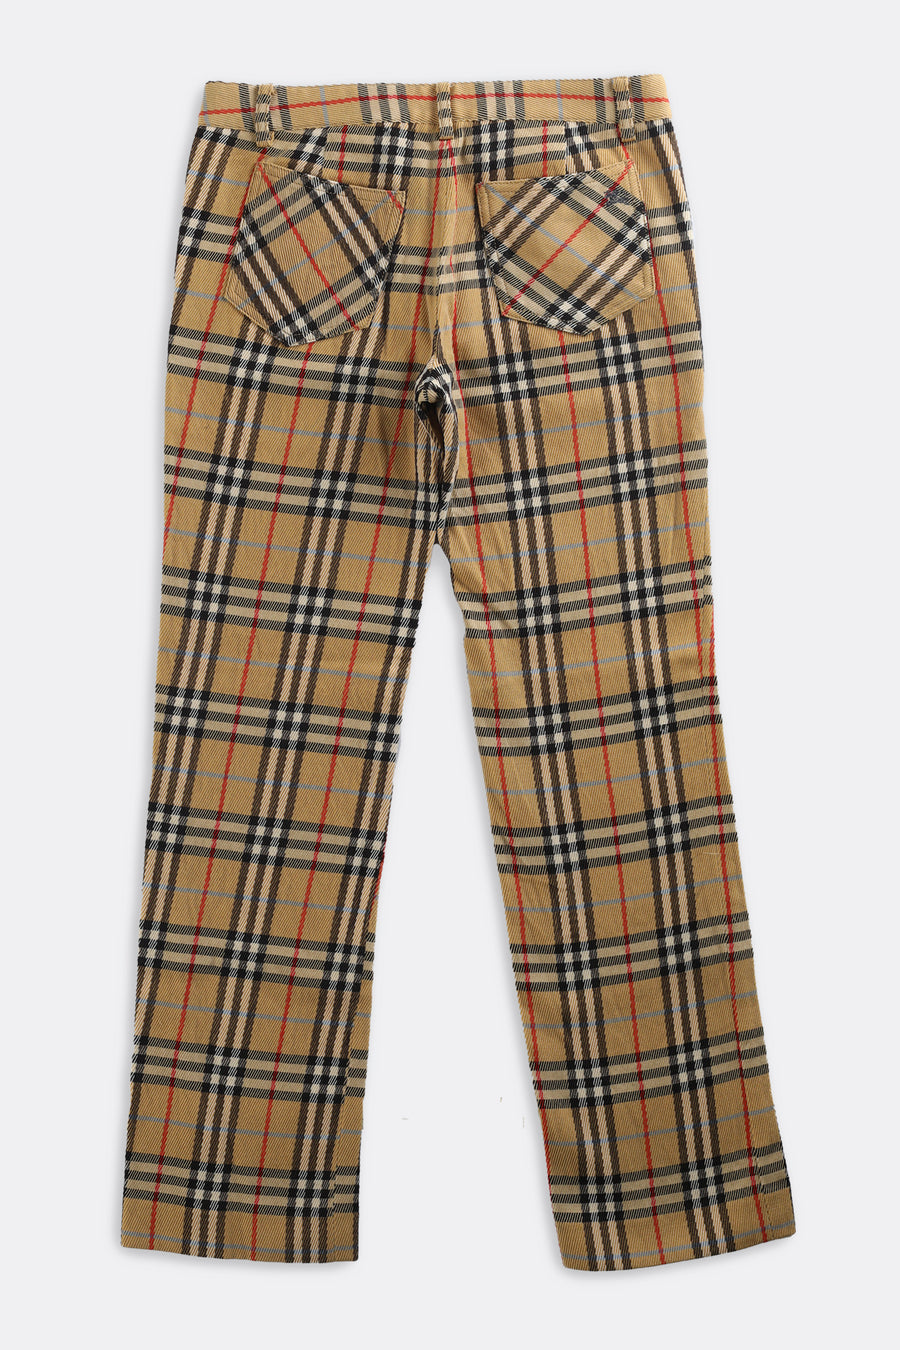 Vintage Burberry Pants